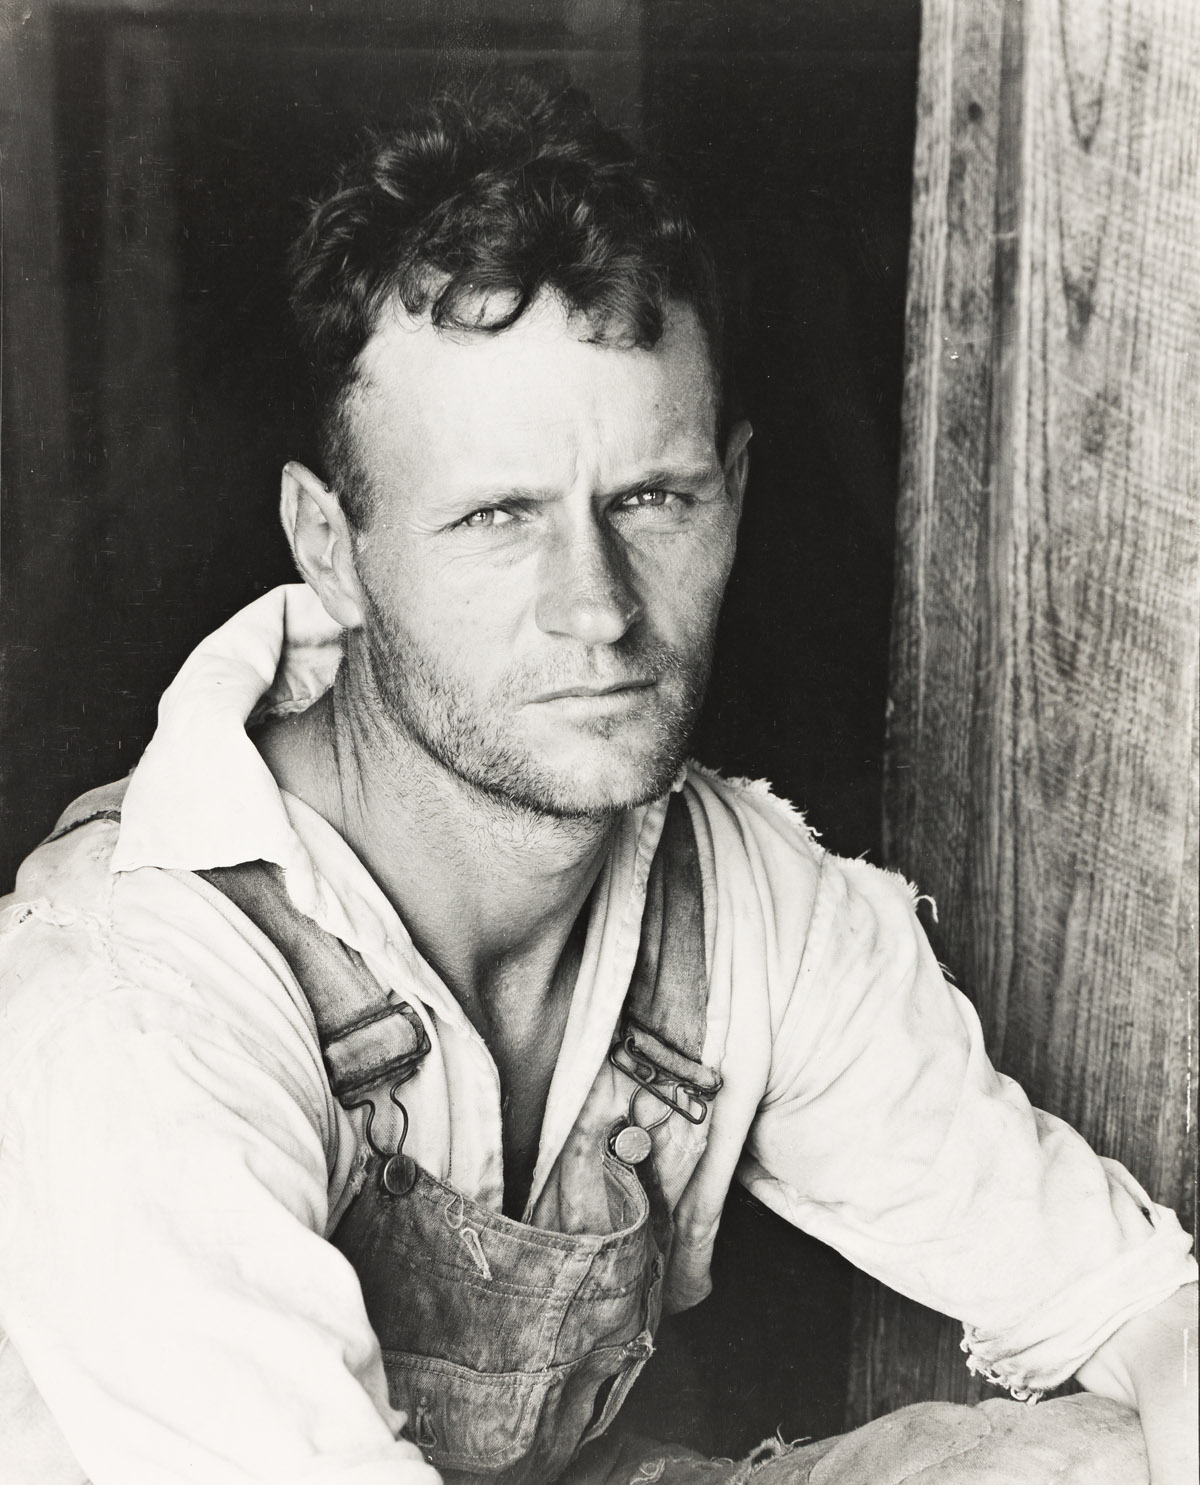 WALKER EVANS (1903-1975) Floyd Burroughs, A Cotton Sharecropper, Hale County, Alabama.